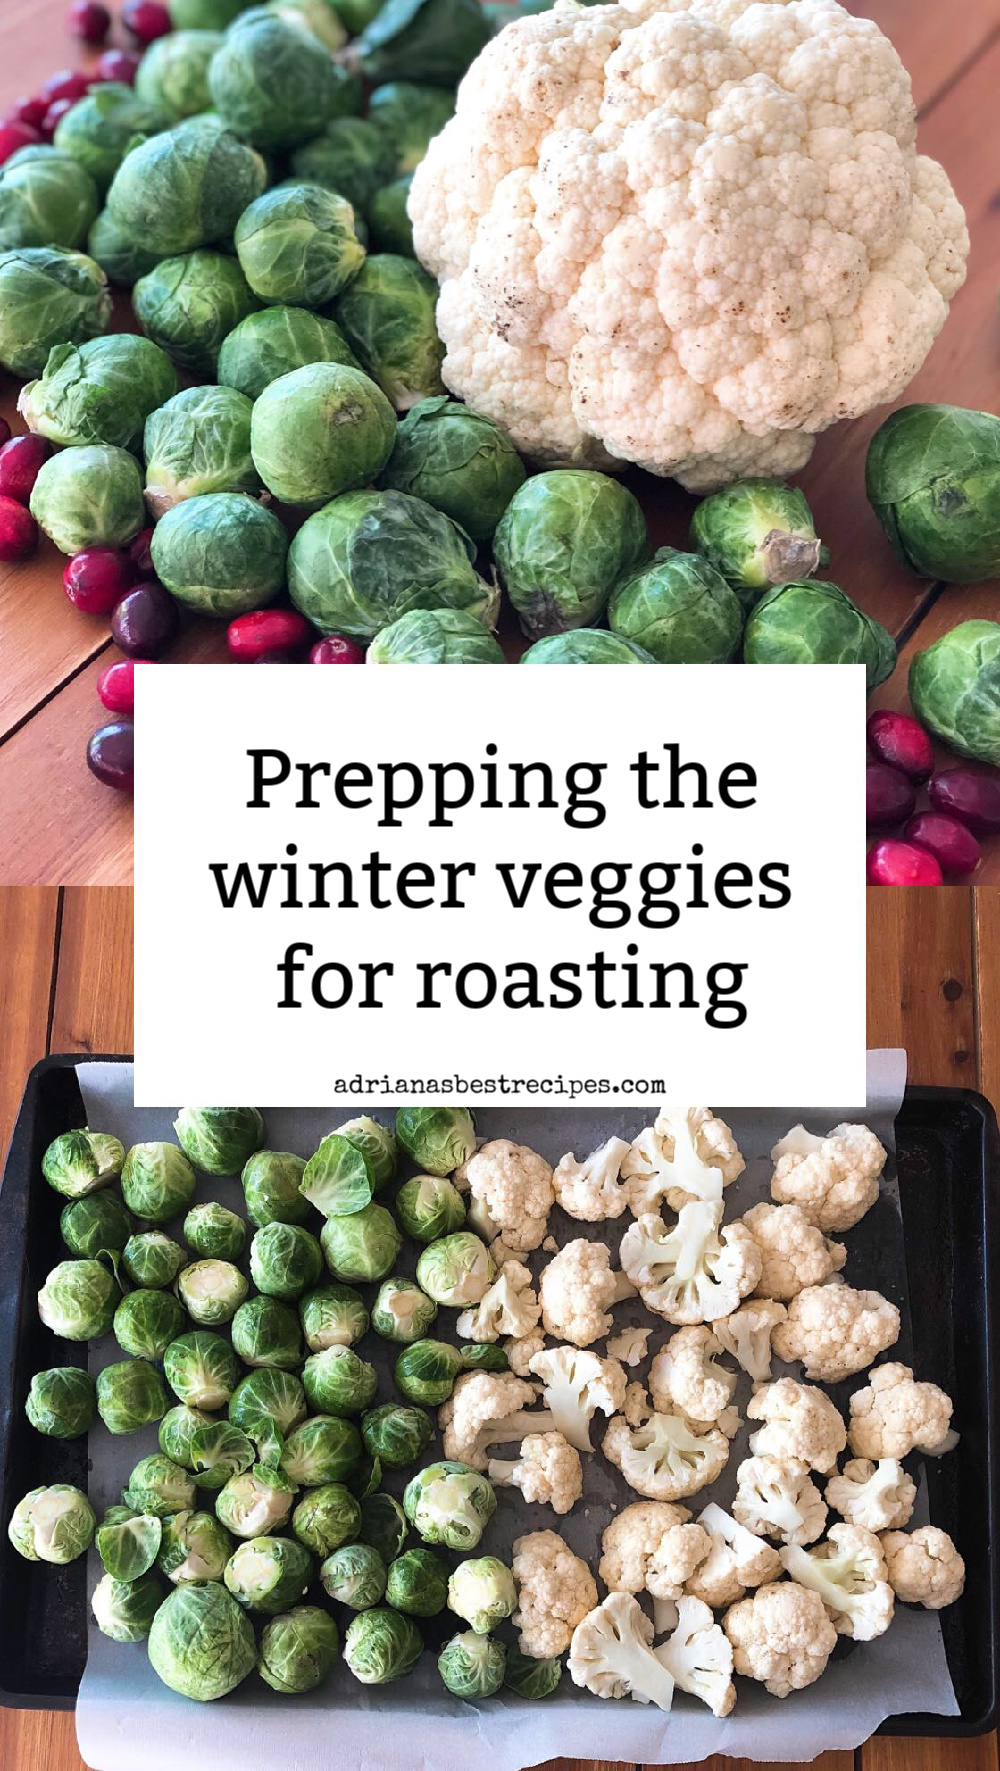 Prepping the winter veggies